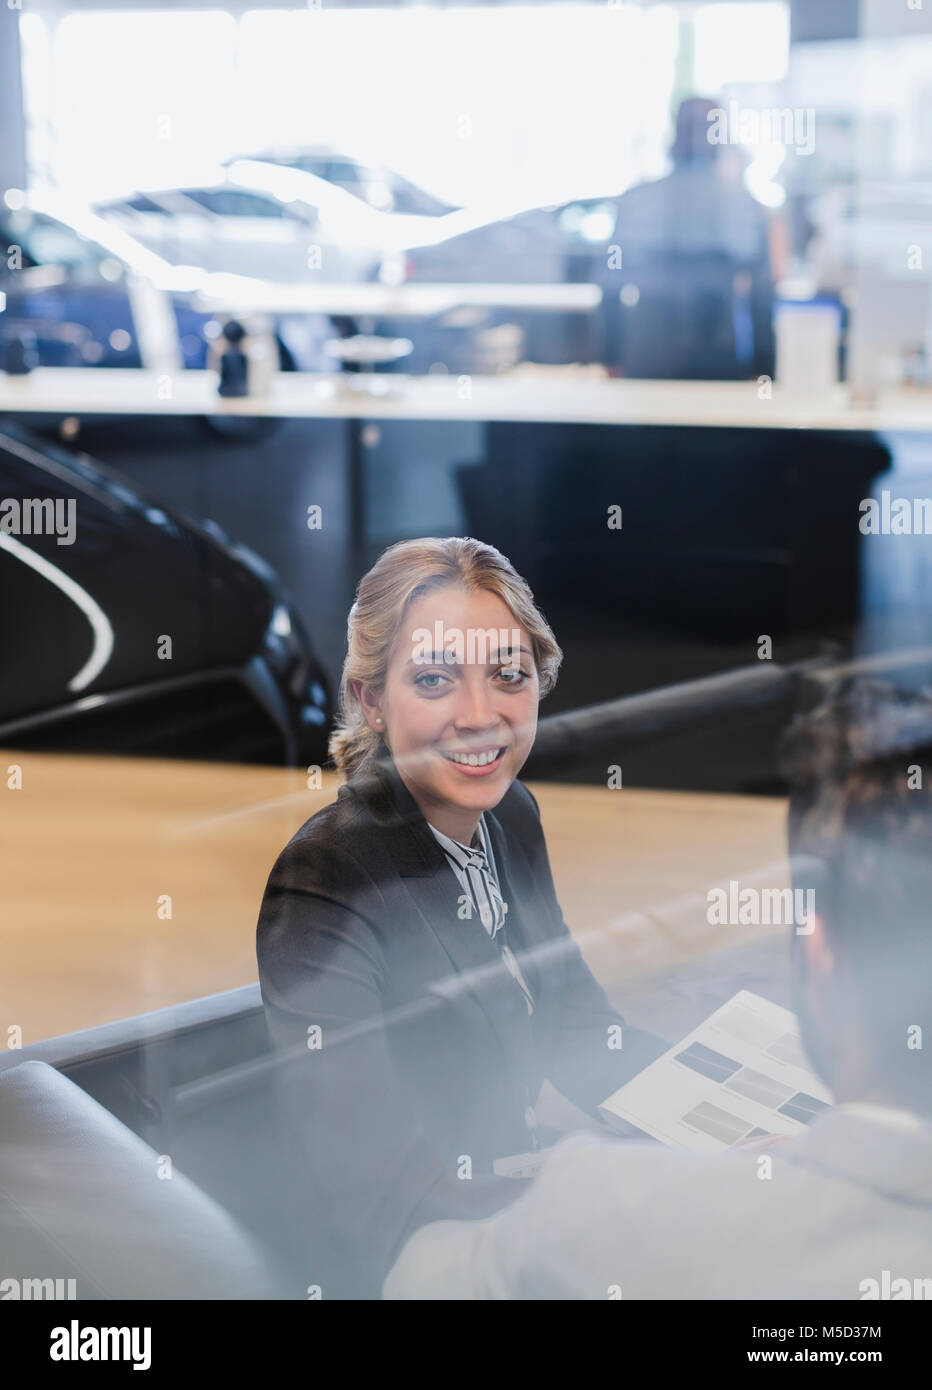 Portrait smiling car saleswoman working in car dealership showroom Stock Photo